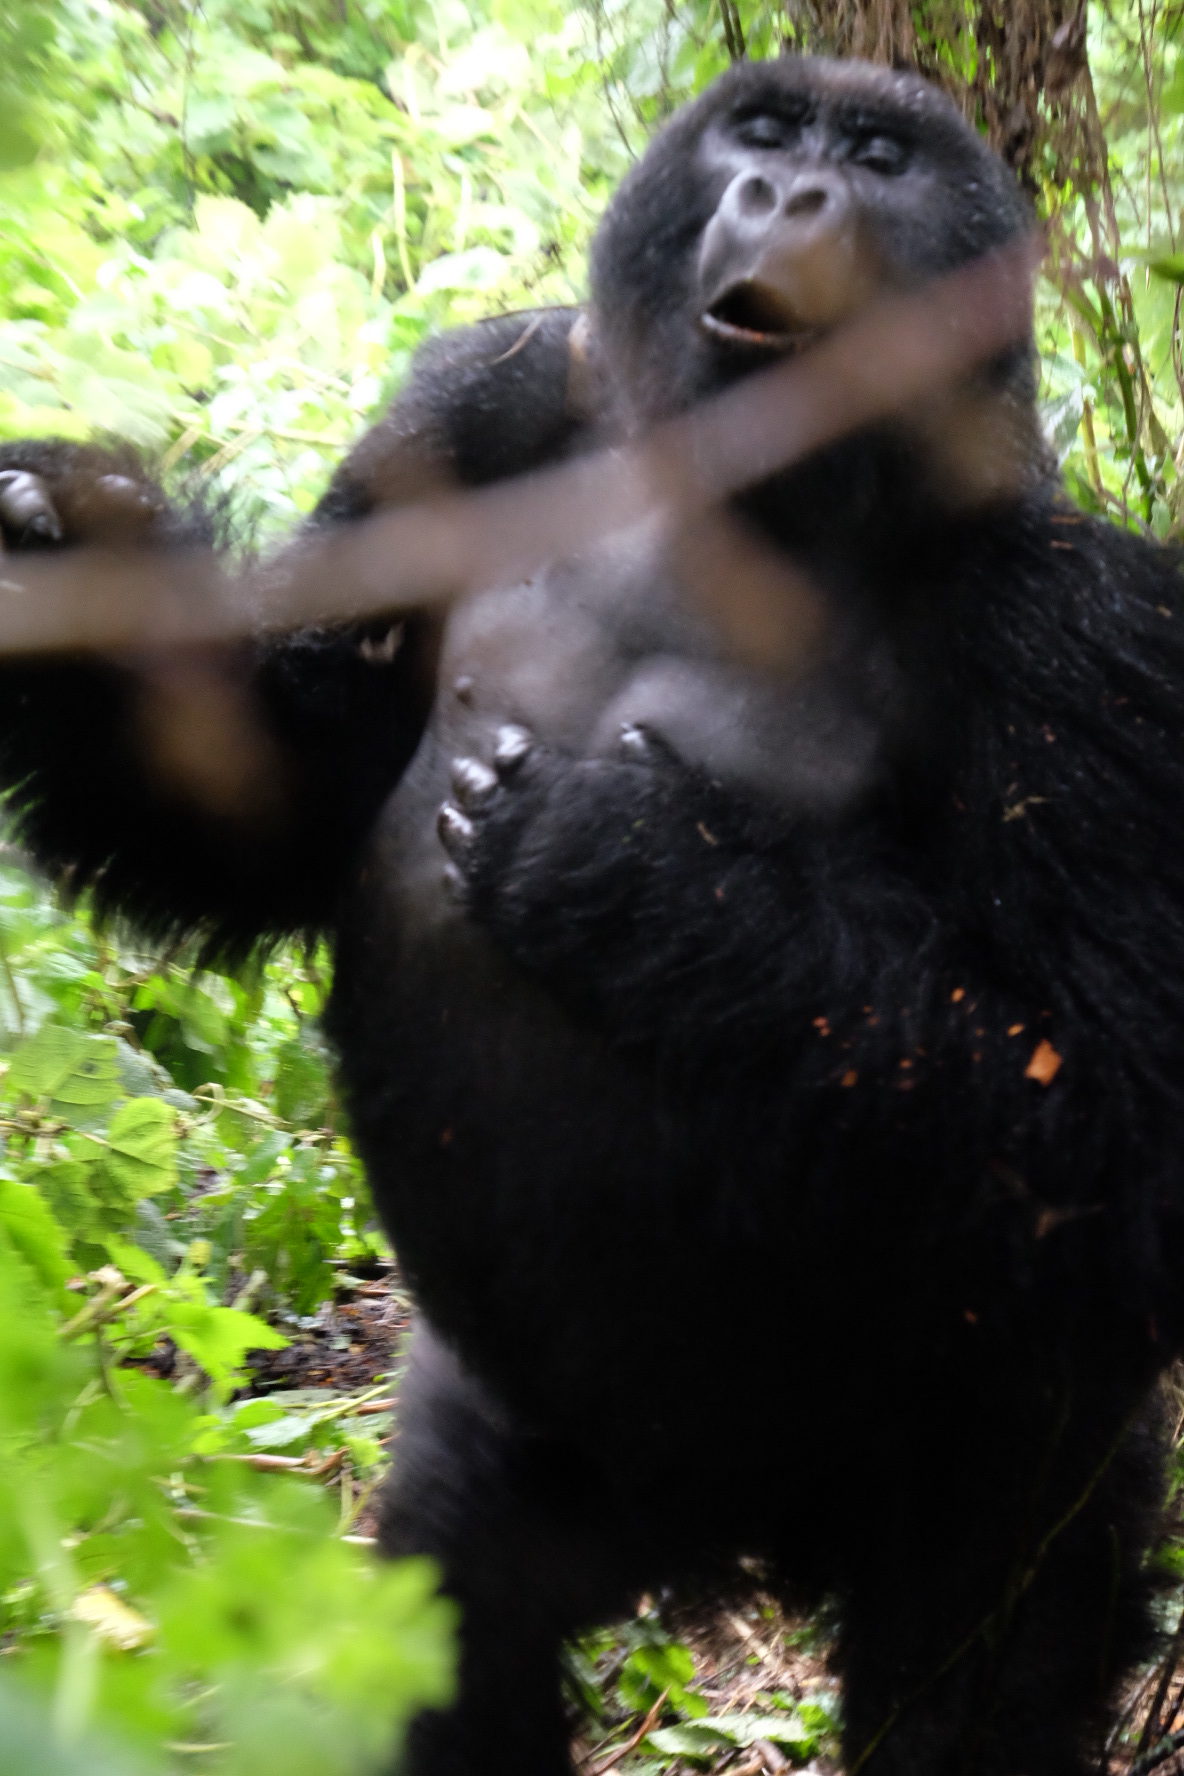 IMG 1480 e1513938712140 - Gorilla Trekking in Rwanda